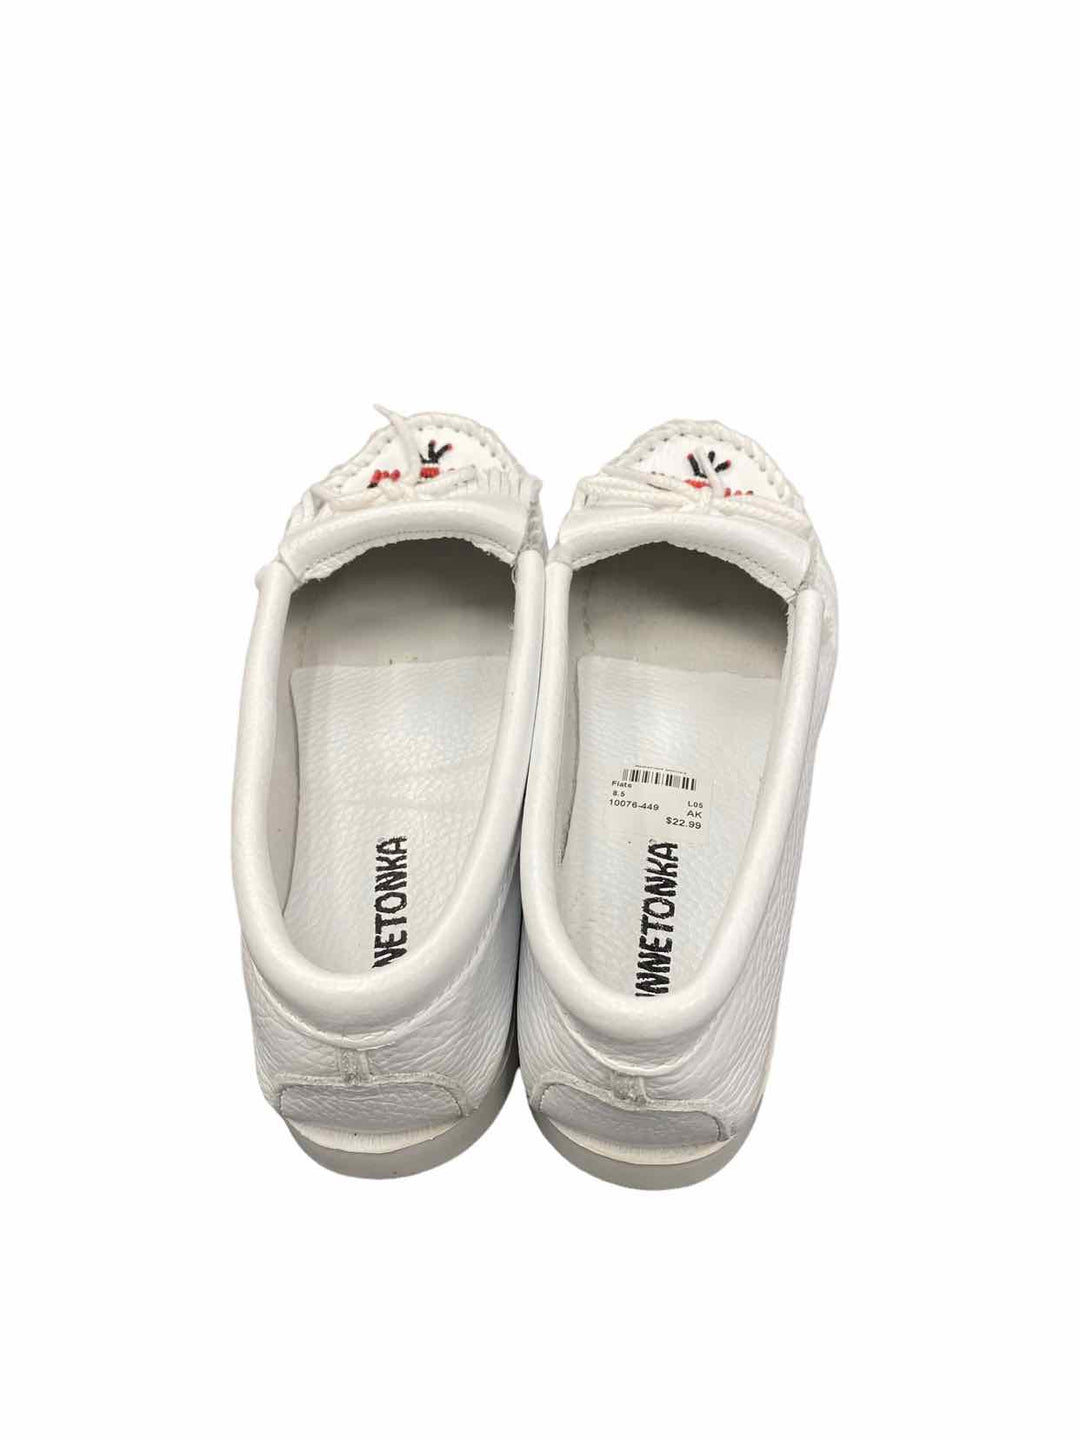 Minnetonka Shoe Size 8.5 White Flats